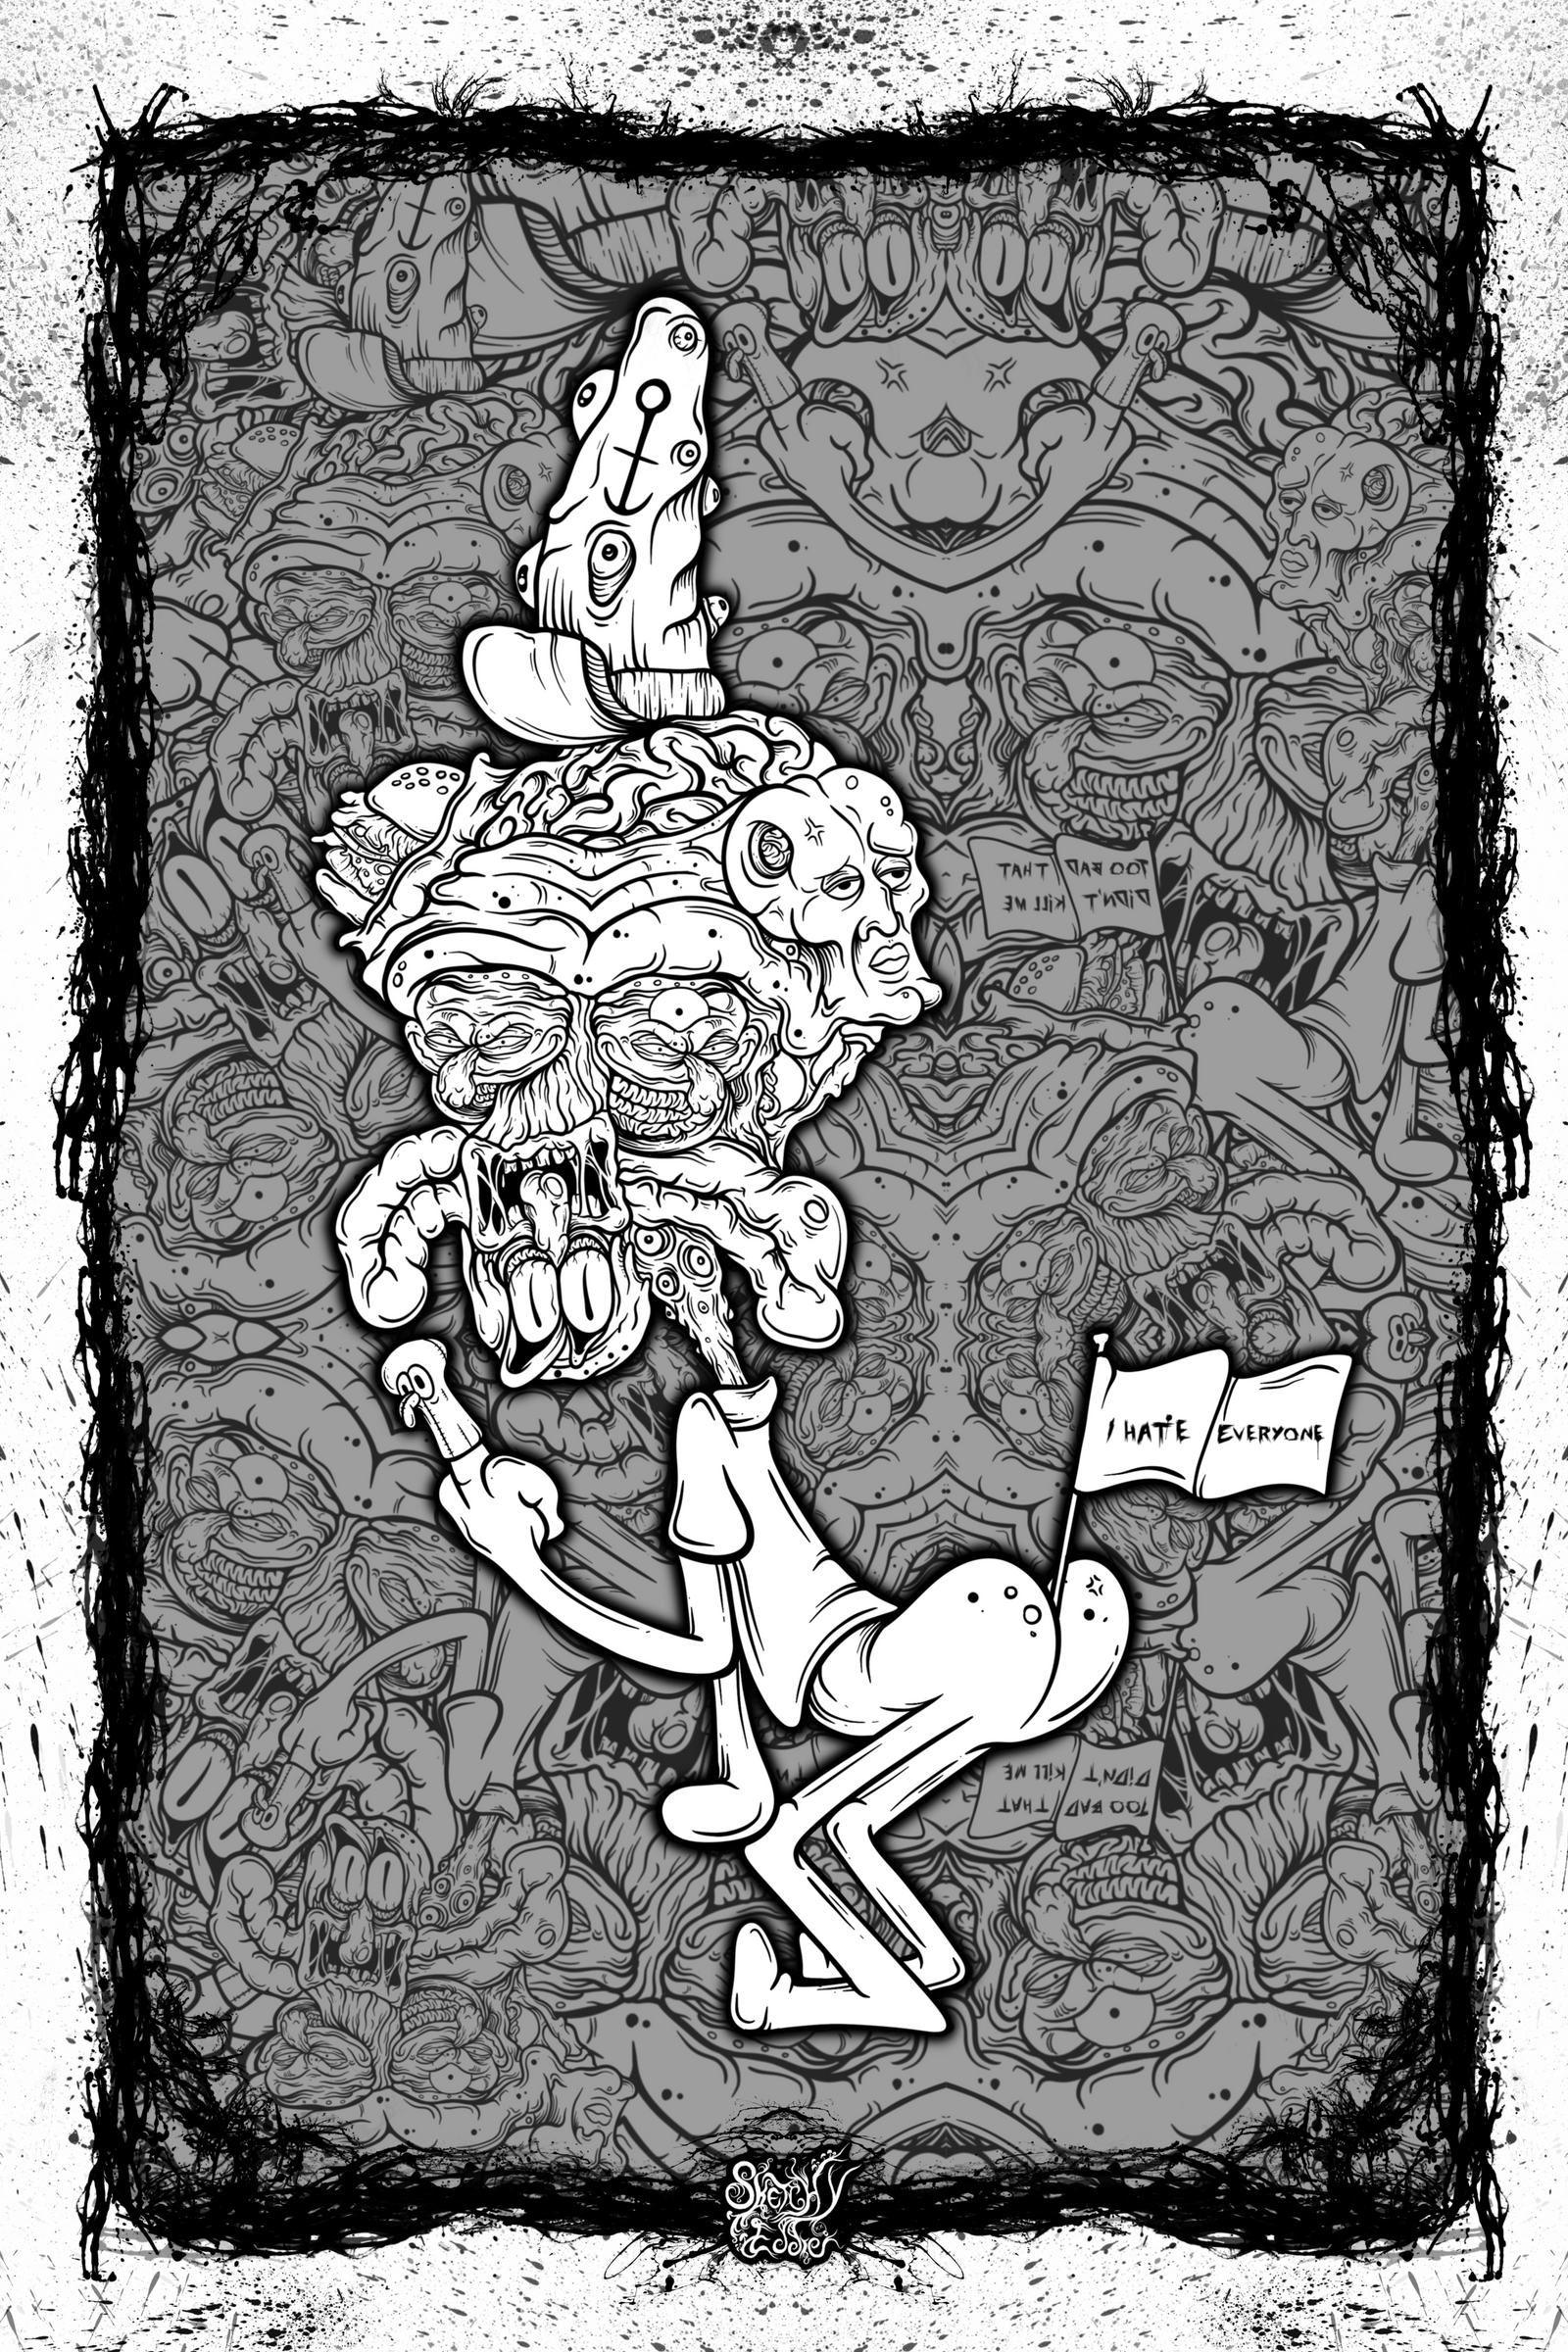 "I Hate Everyone" Squidward Inktober Print